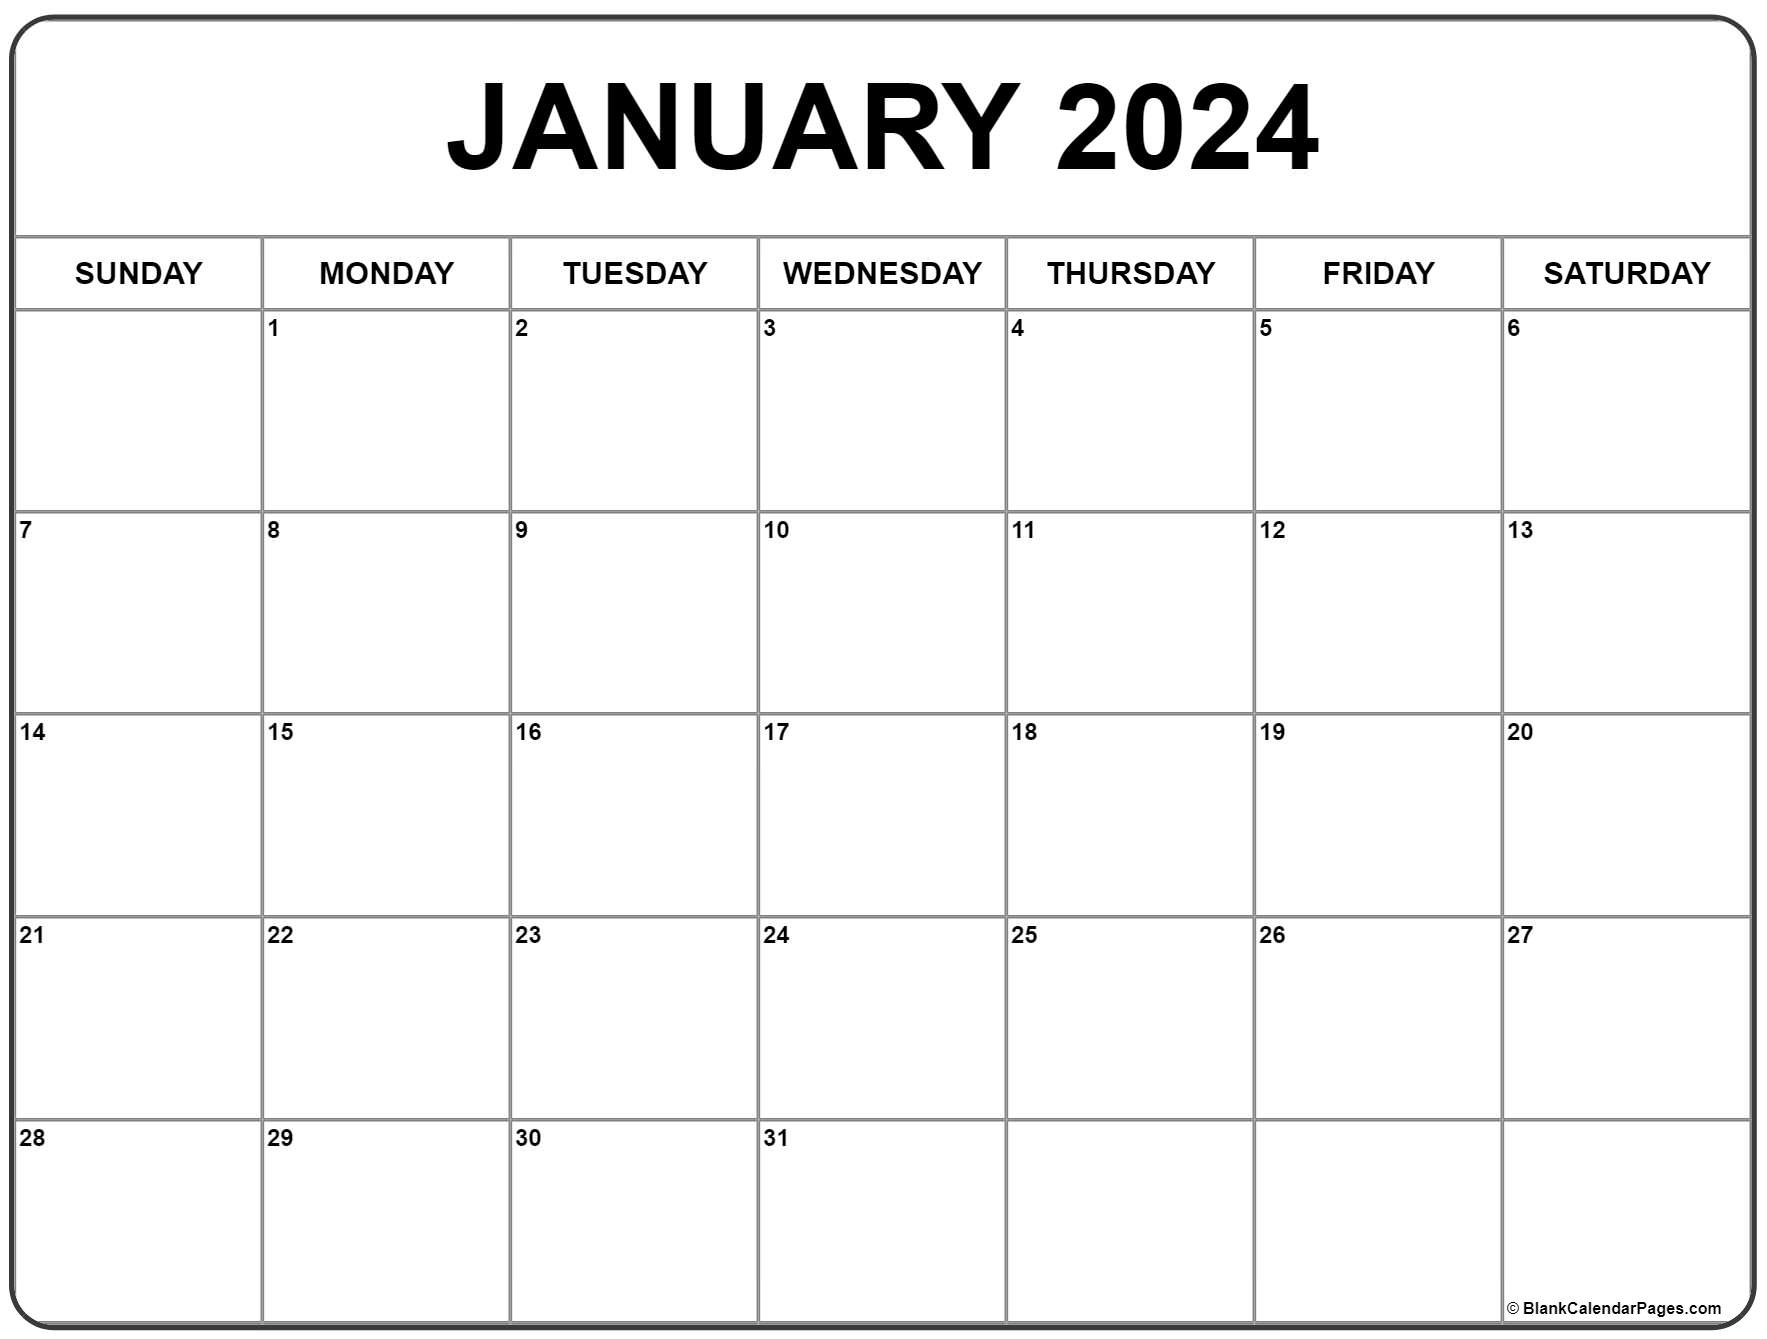 January 2024 Calendar | Free Printable Calendar for January Monthly Calendar 2024 Printable